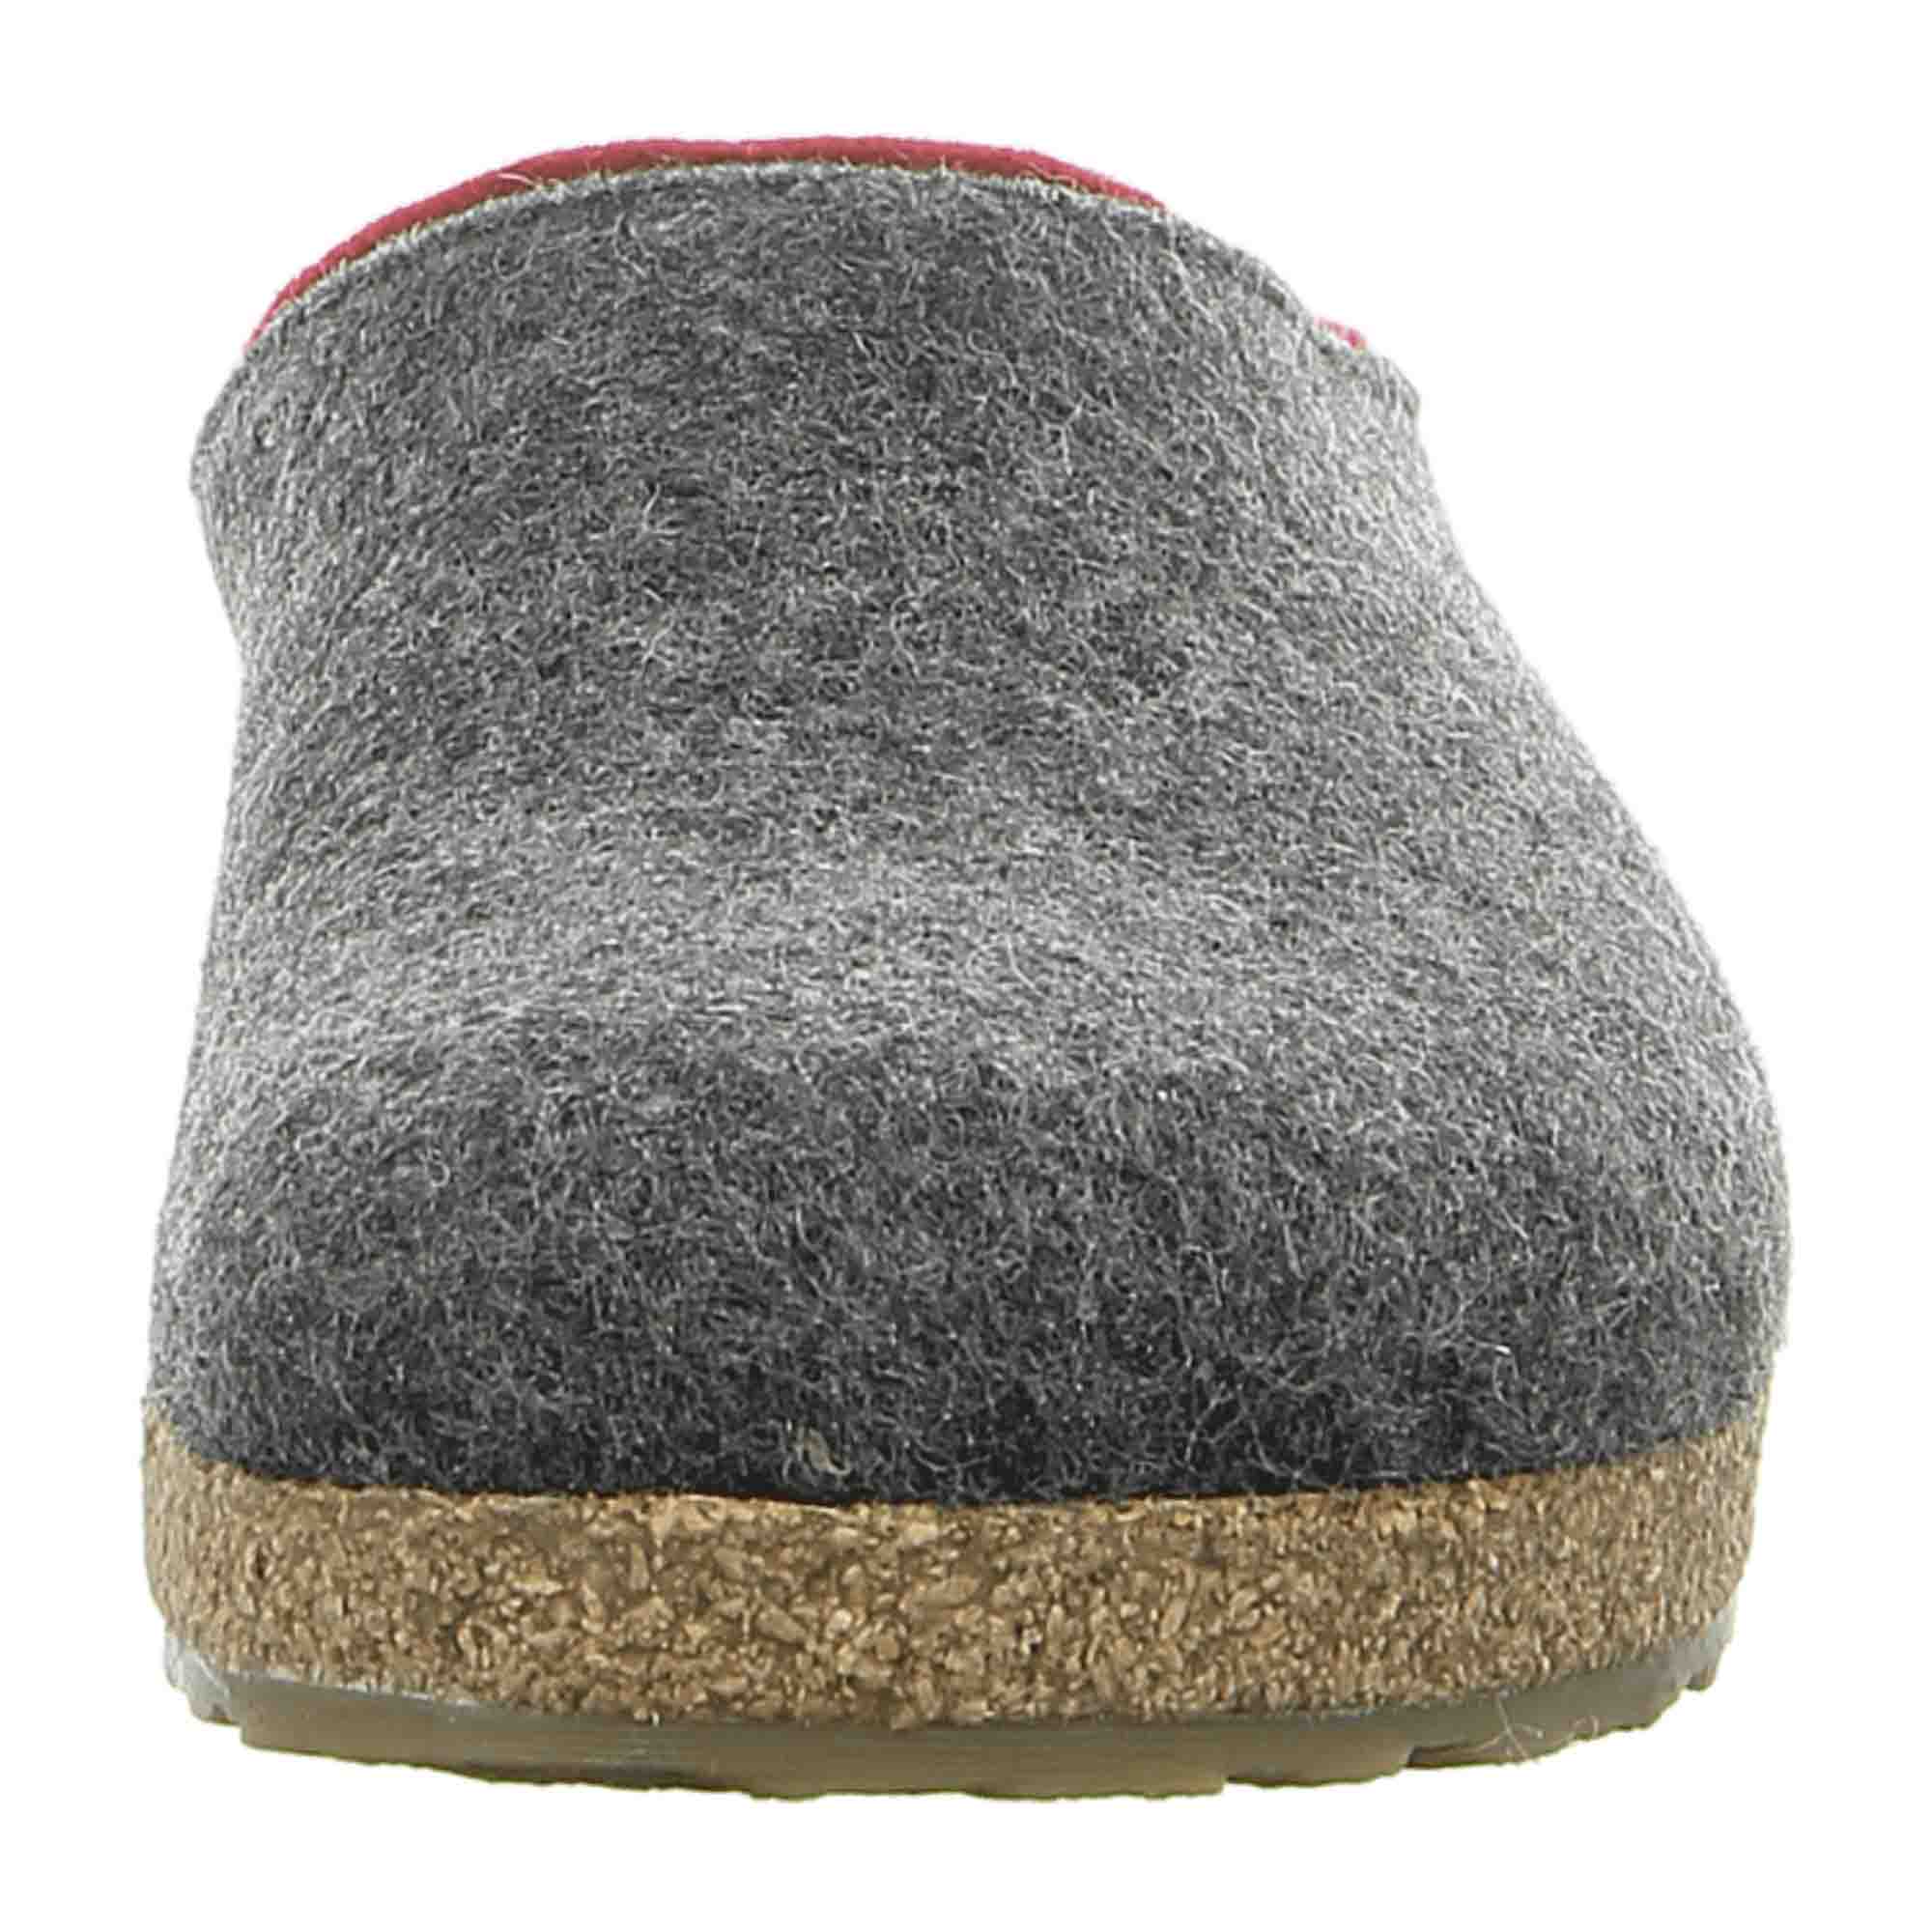 Haflinger Grizzly Kris Men's Clogs, Grey – Comfortable, Durable & Stylish